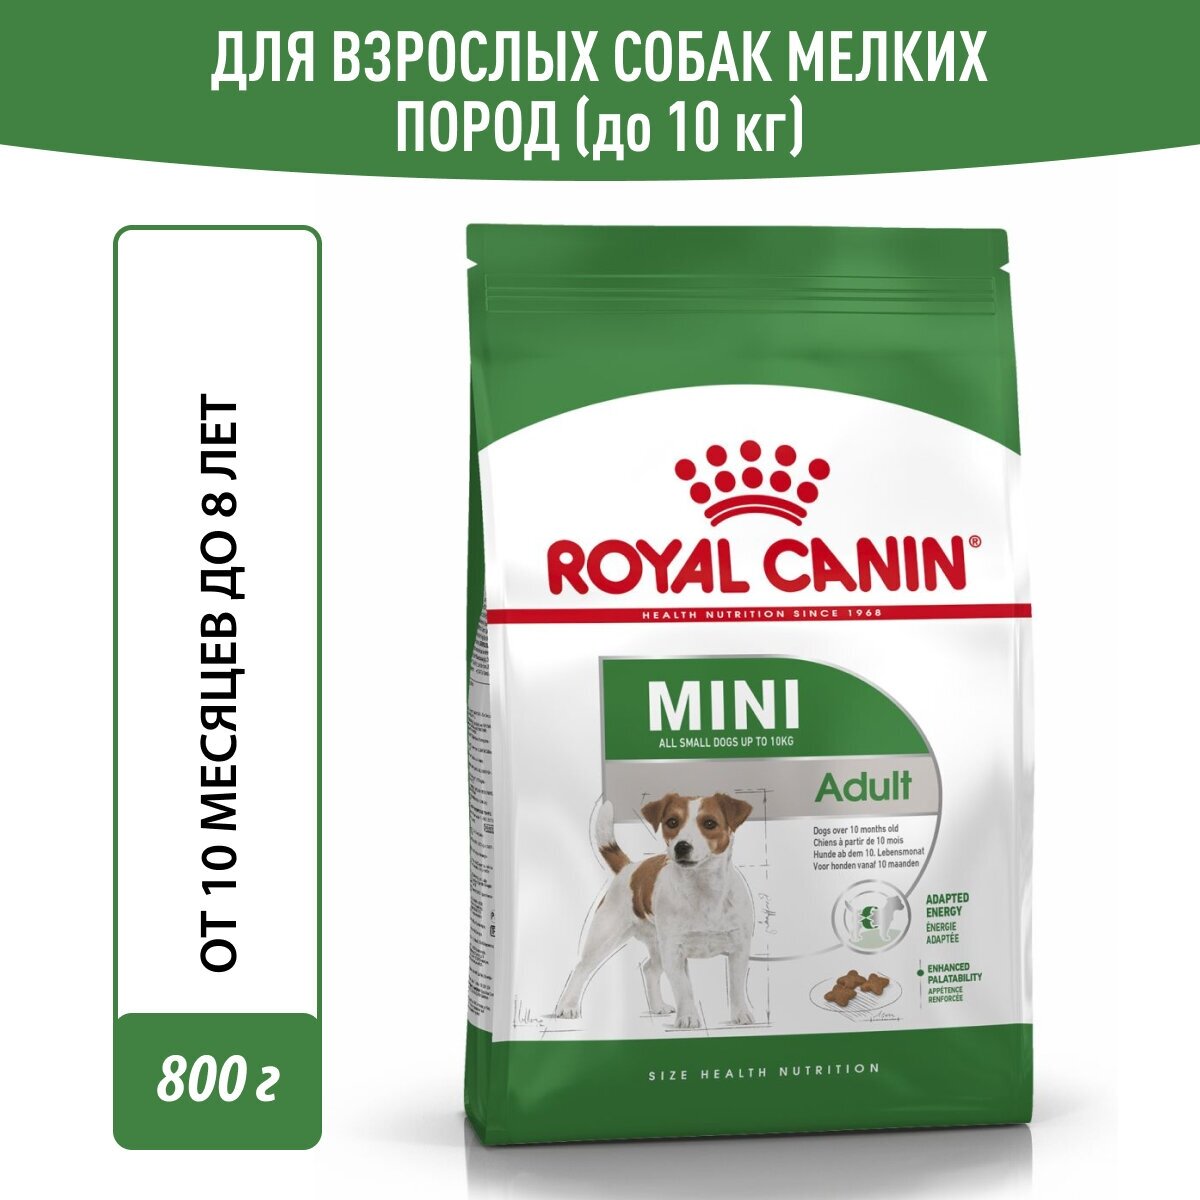 Royal Canin Mini Adult полнорационный сухой корм для взрослых собак мелких пород старше 10 месяцев - 1 шт. х 800 г.